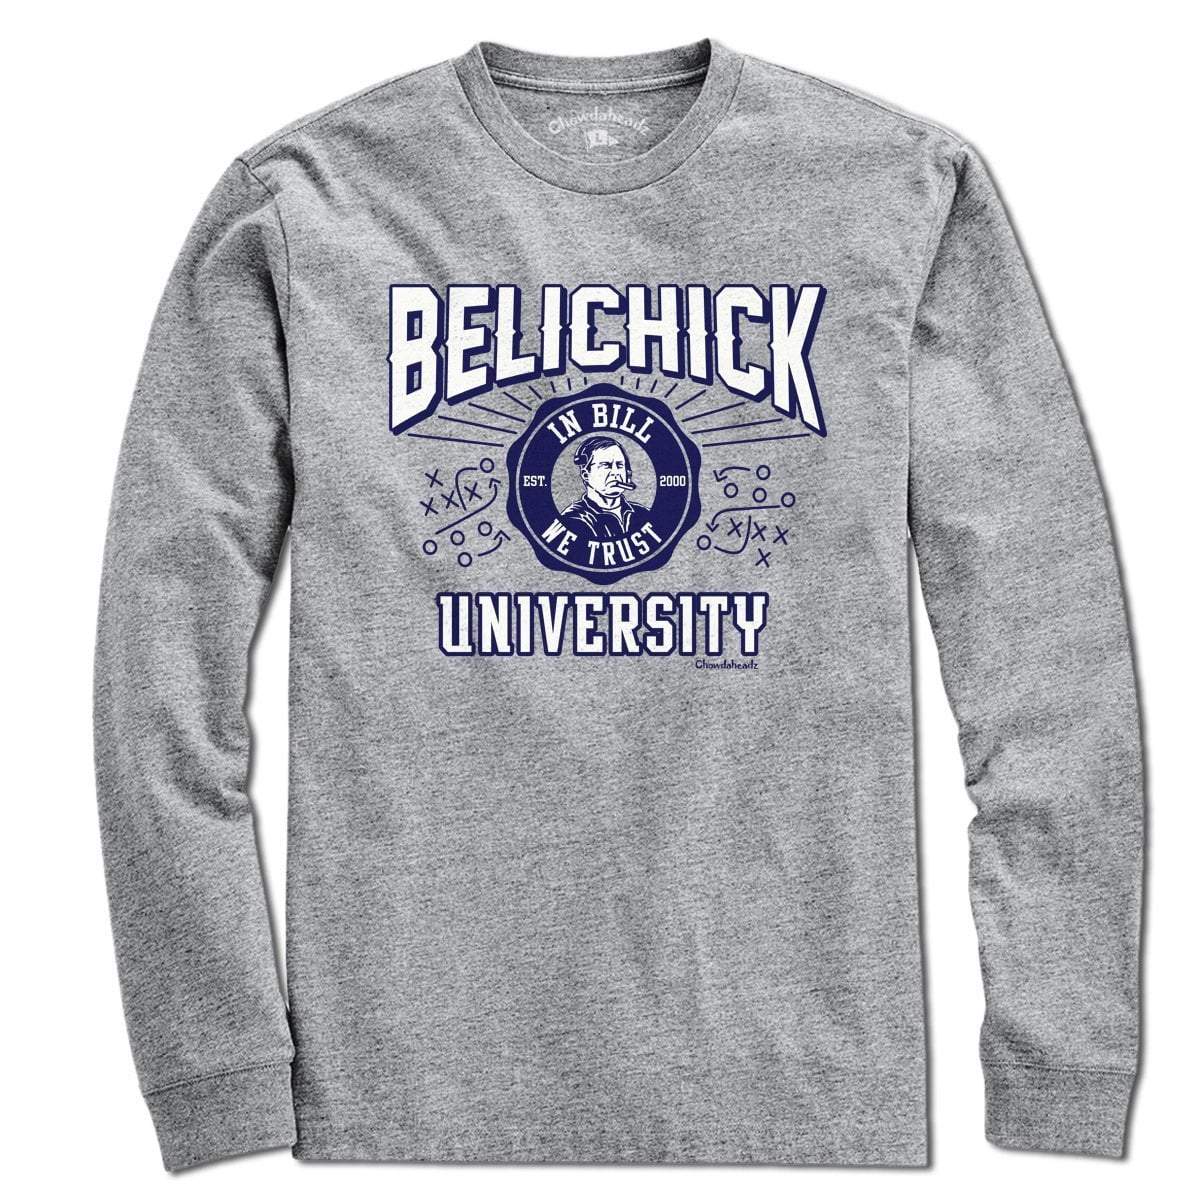 Belichick University Seal T-Shirt - Chowdaheadz